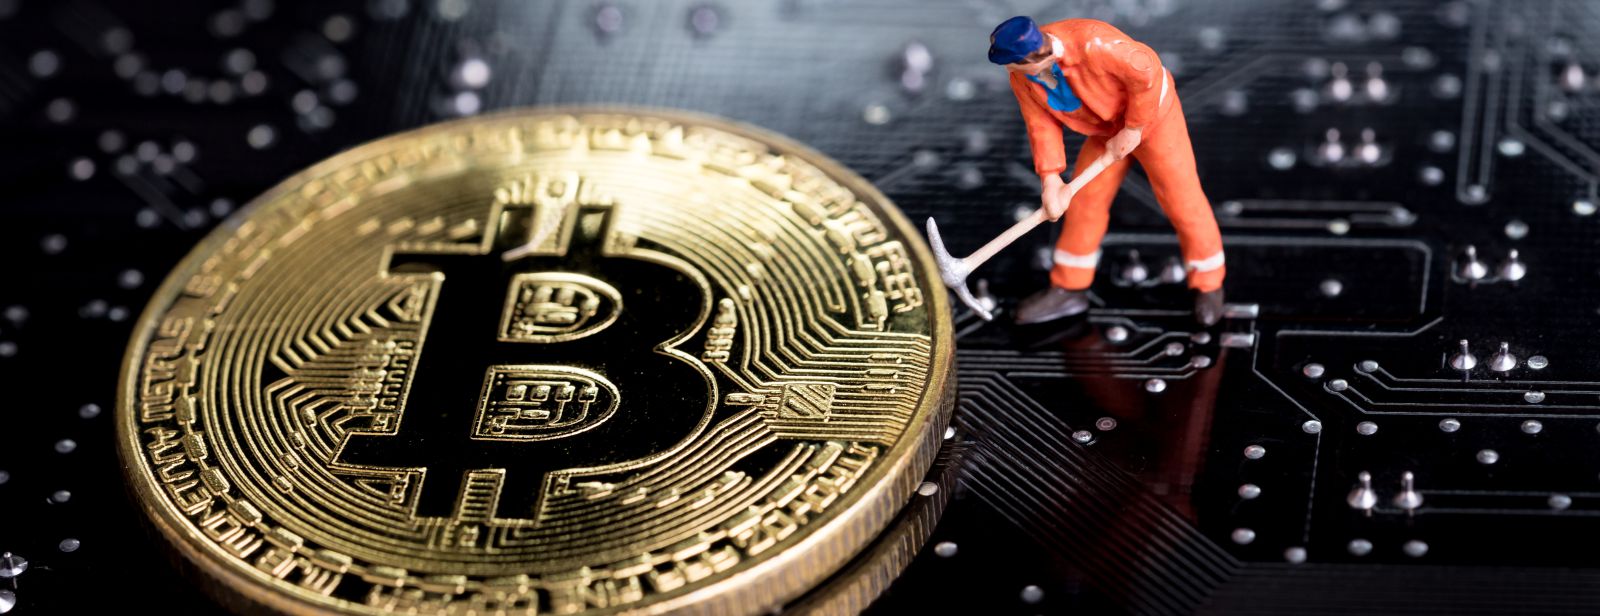 pomarańczowa figurka górnika na tle monety Bitcoin